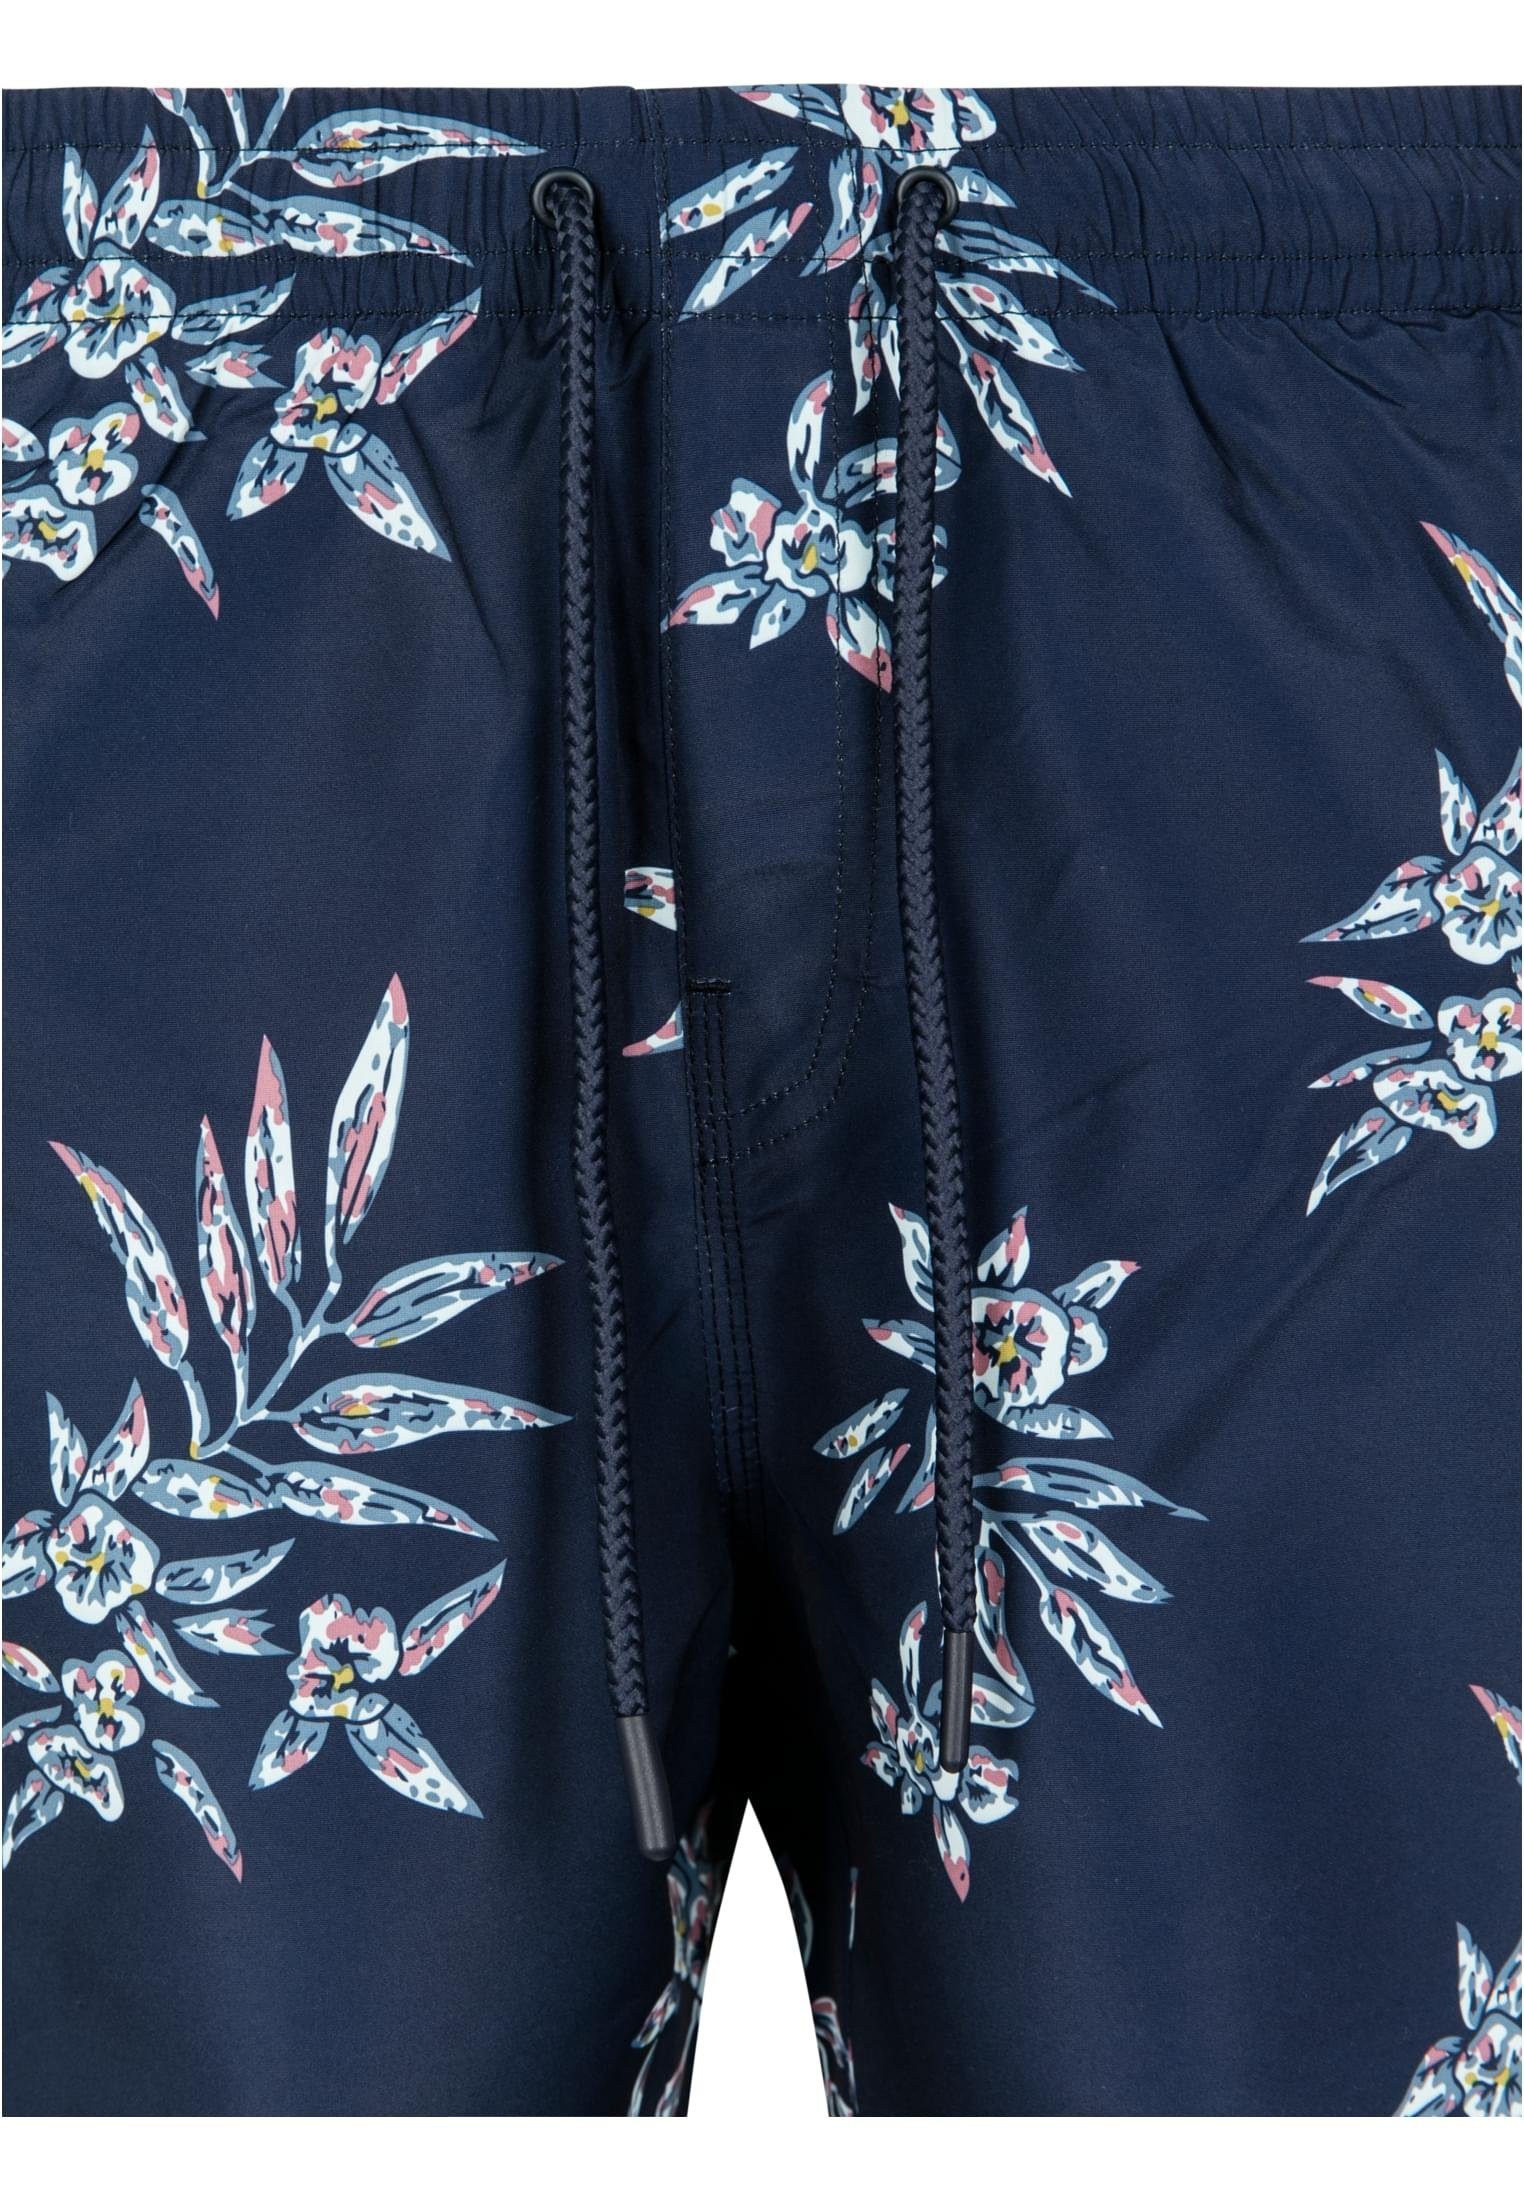 floral Shorts Badeshorts CLASSICS Herren Pattern URBAN Swim subtile